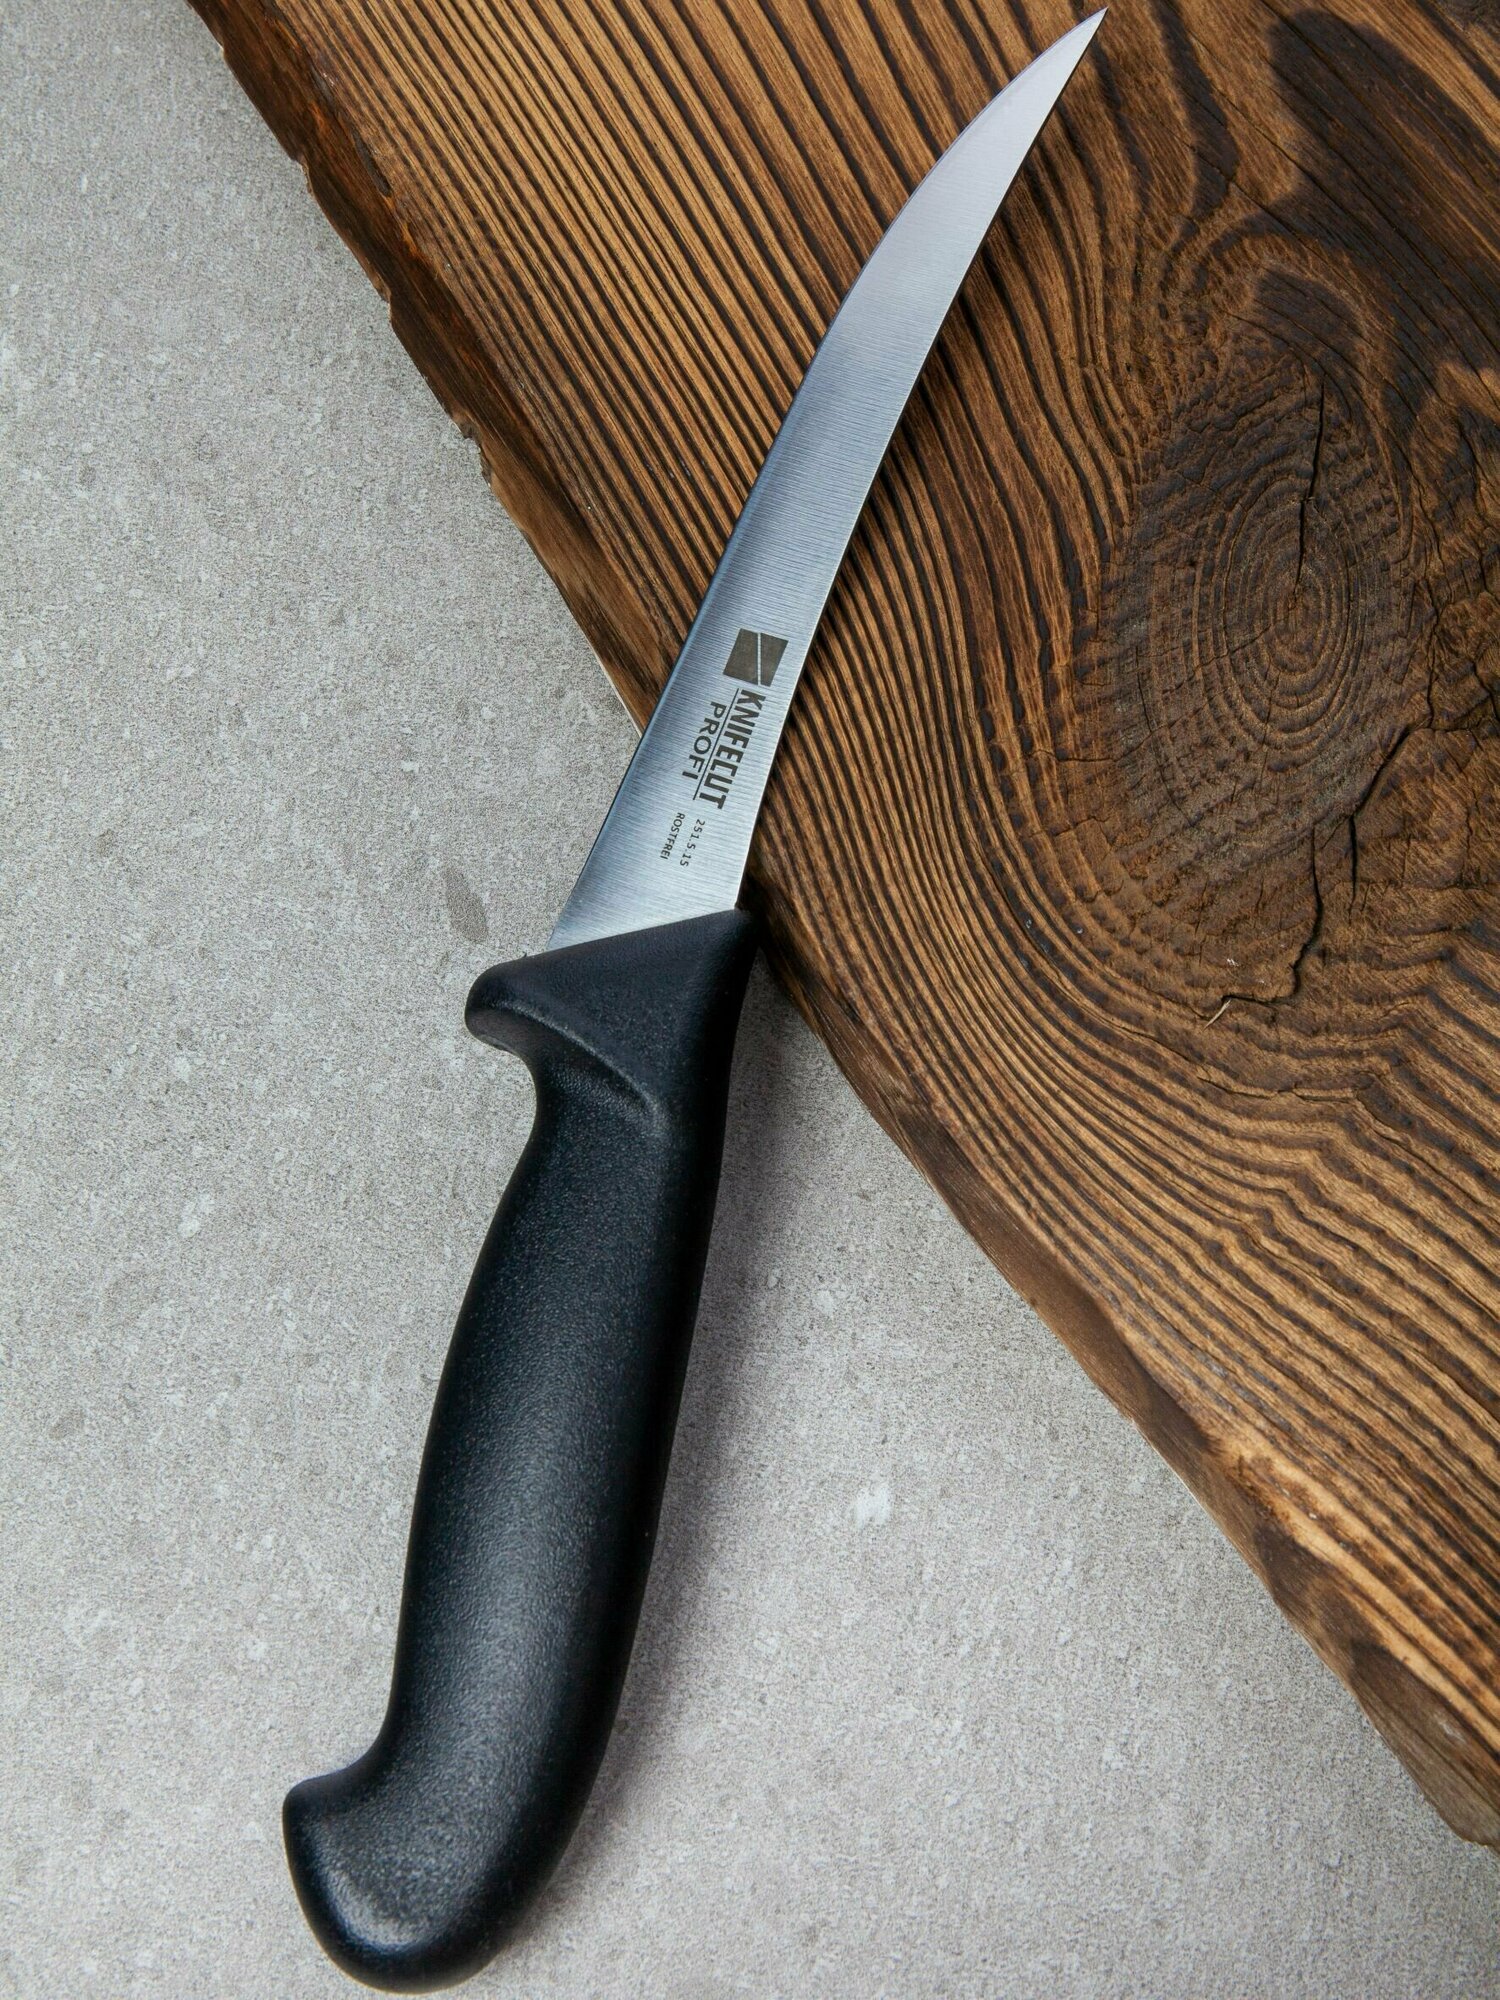 Нож обвалочный KNIFECUT, длина лезвия 15 см